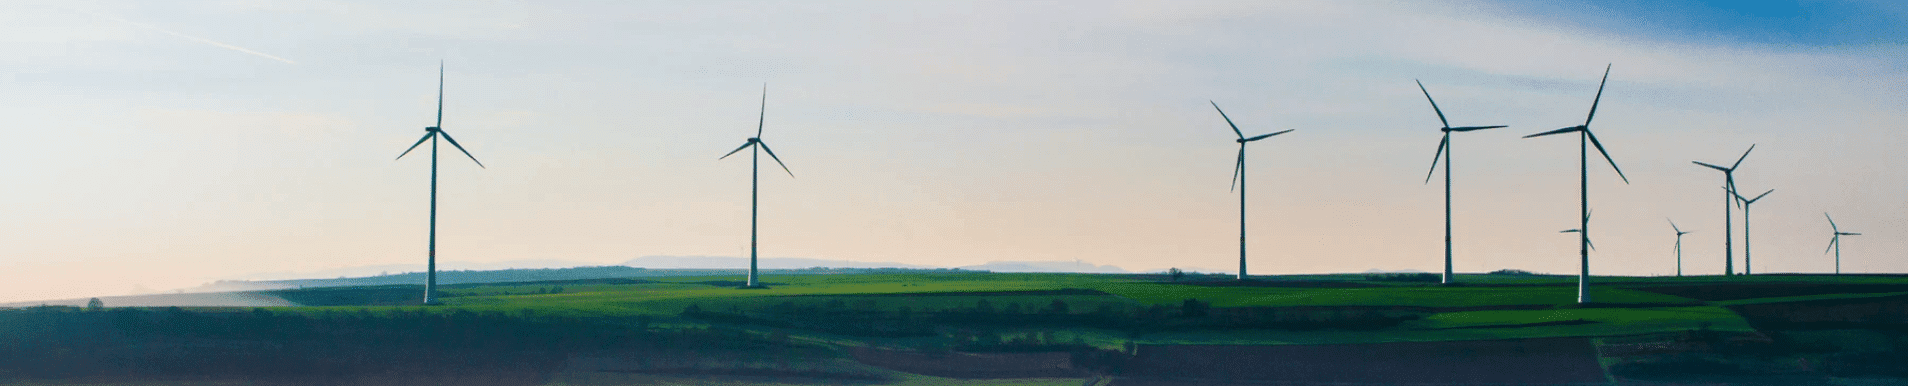 windmills klimate change